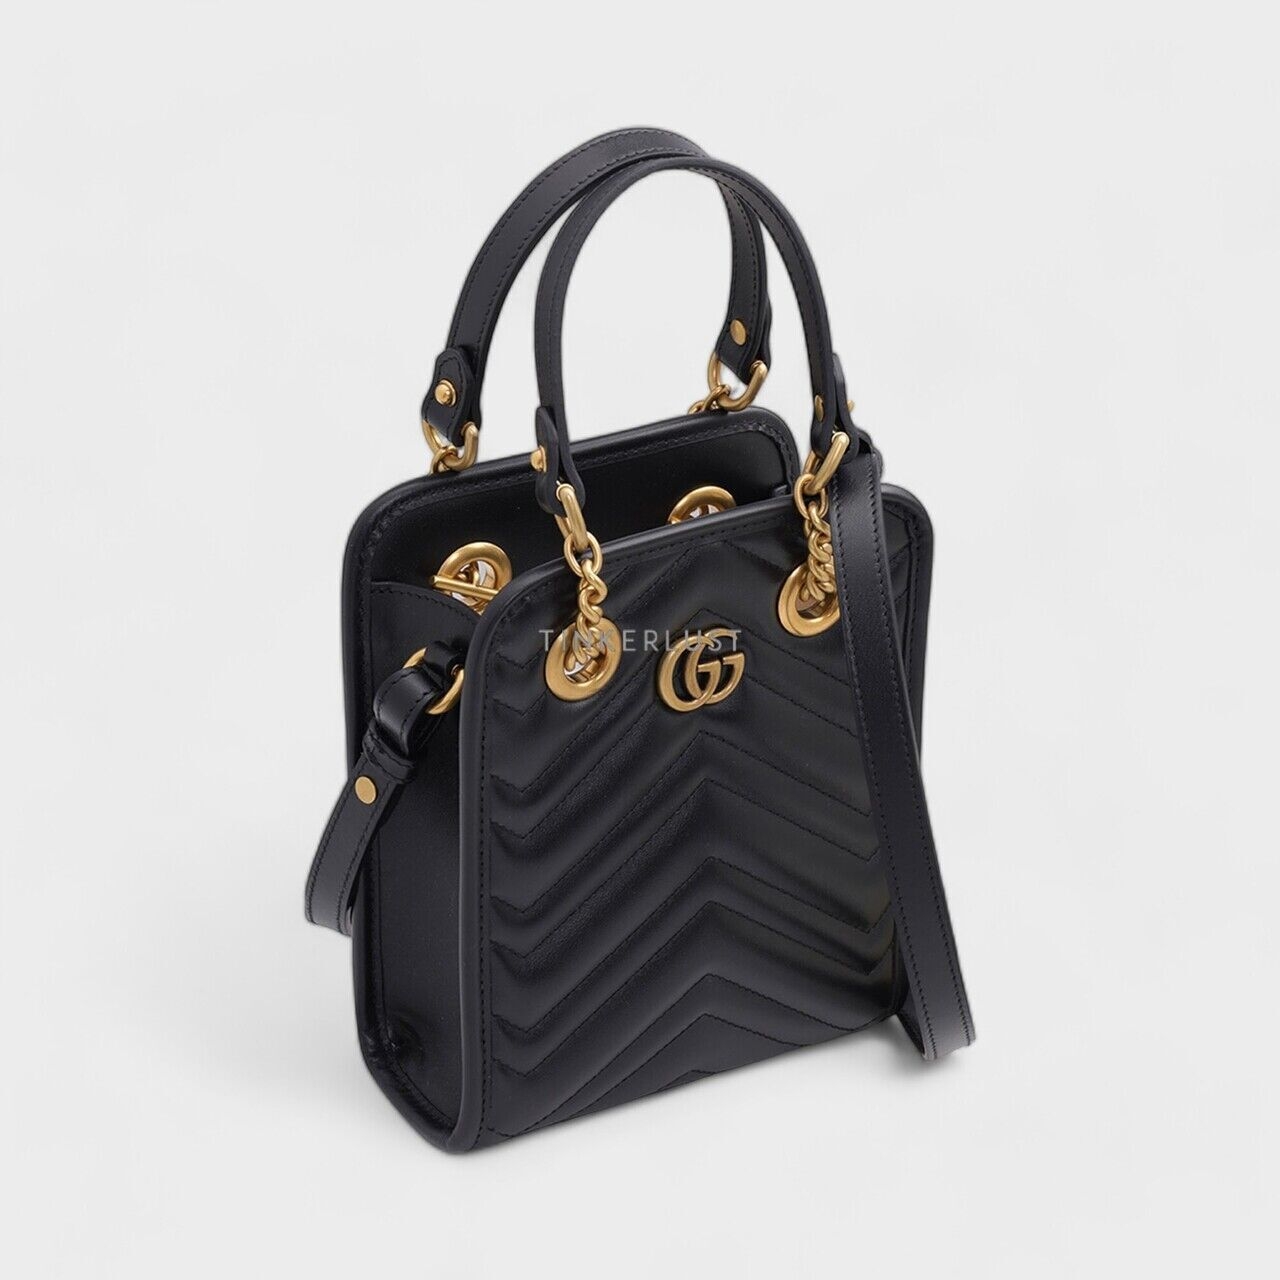 Gucci Mini GG Marmont in Black Chevron Leather Matelassé Sacthel Bag